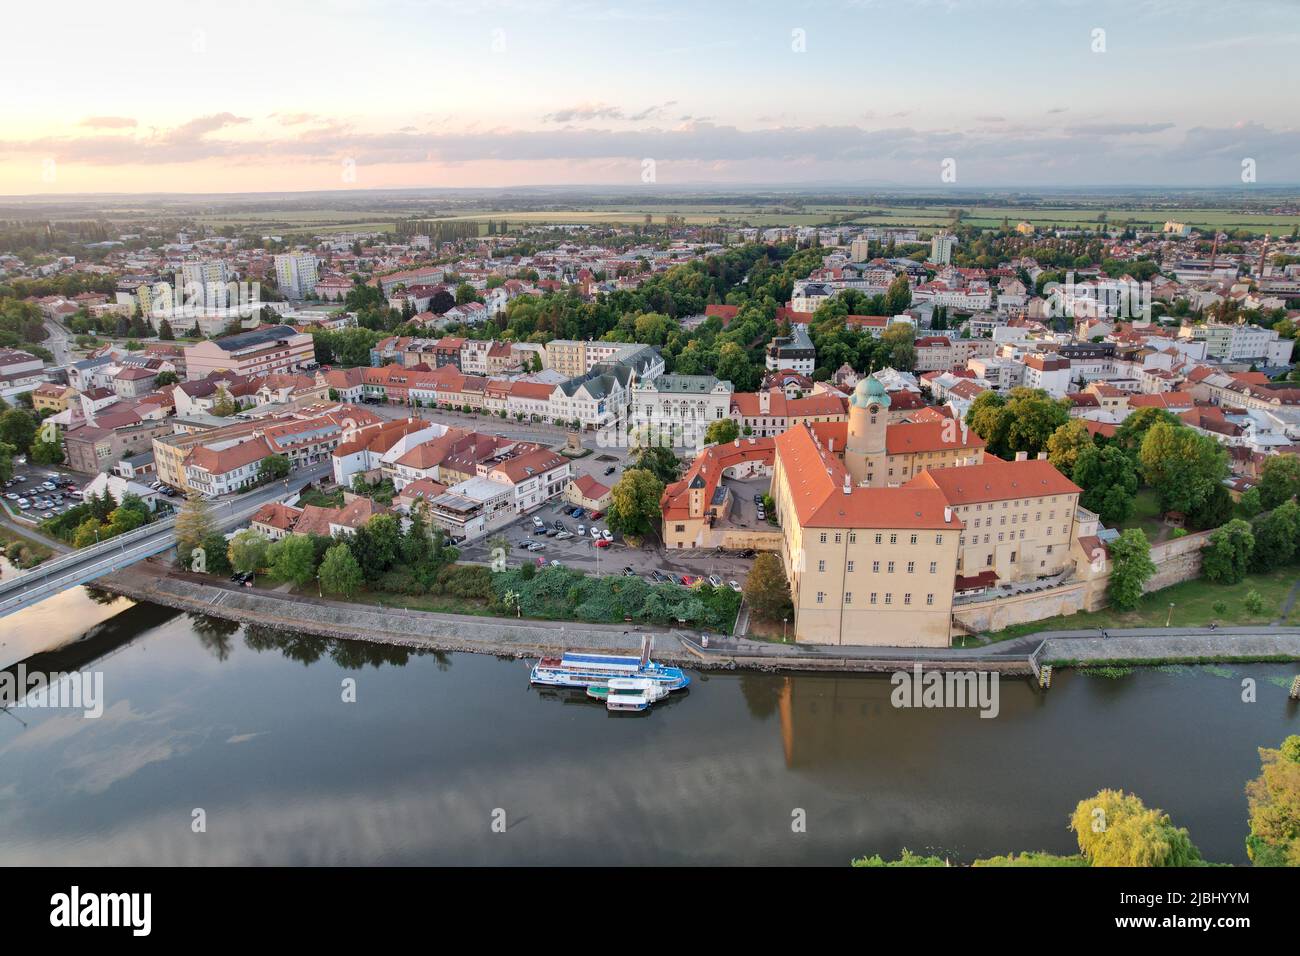 Podebrady ciudad histórica y castillo en el río Labe, Chateau Poděbrady (Zámek Poděbrady) República Checa, paisaje aéreo escénico vista panorámica, República Checa Foto de stock